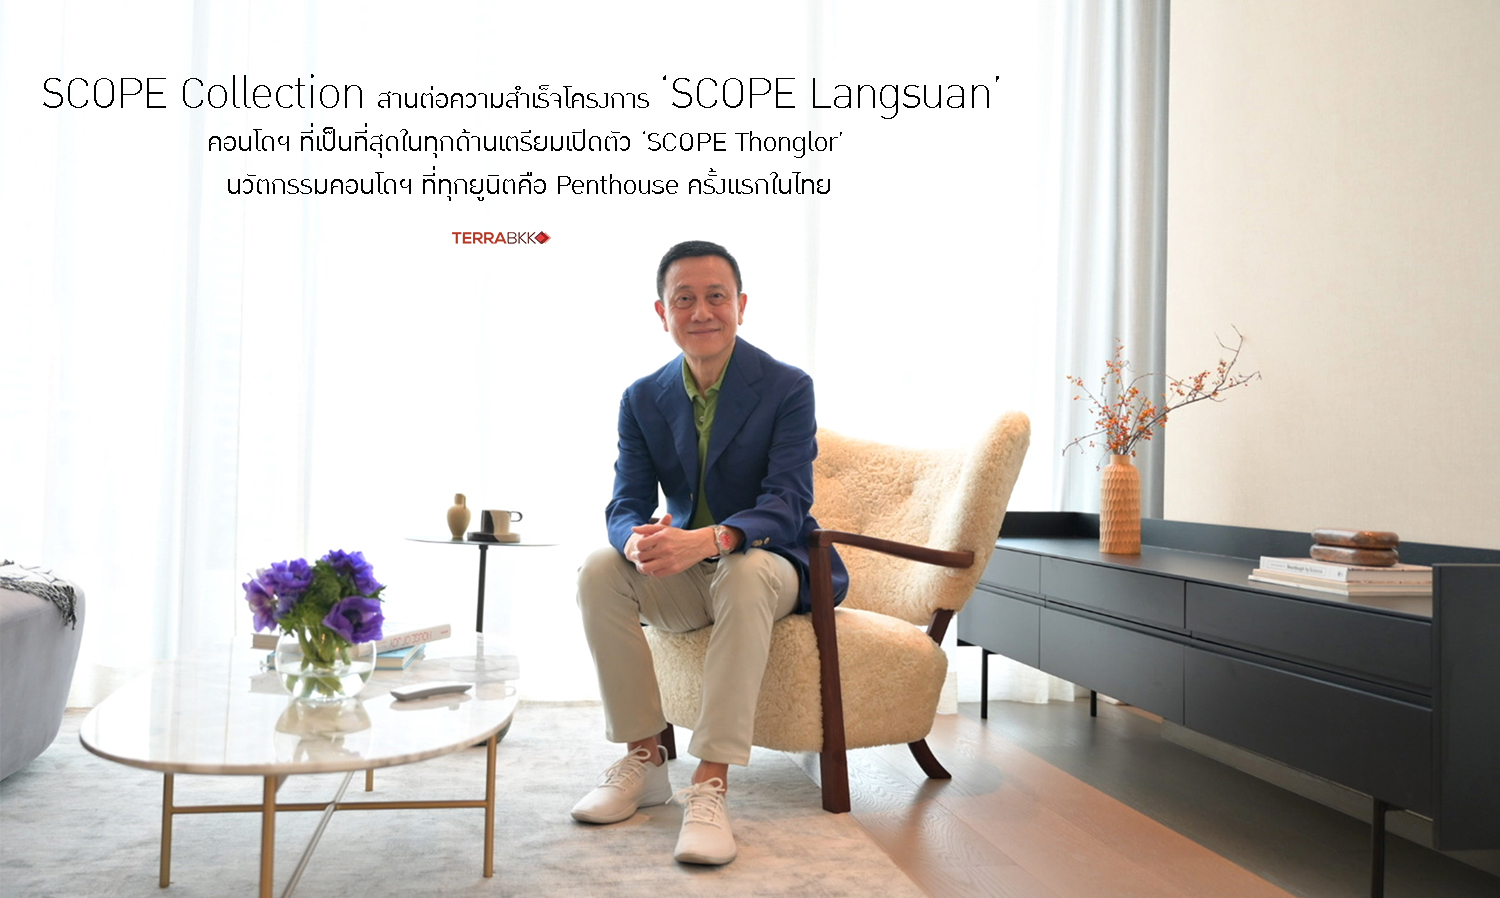 SCOPE Collection สานต่อความสำเร็จโครงการ ‘SCOPE Langsuan’ คอนโดฯ ที่เป็นที่สุดในทุกด้านเตรียมเปิดตัว ‘SCOPE Thonglor’ นวัตกรรมคอนโดฯ ที่ทุกยูนิตคือ Penthouse ครั้งแรกในไทย